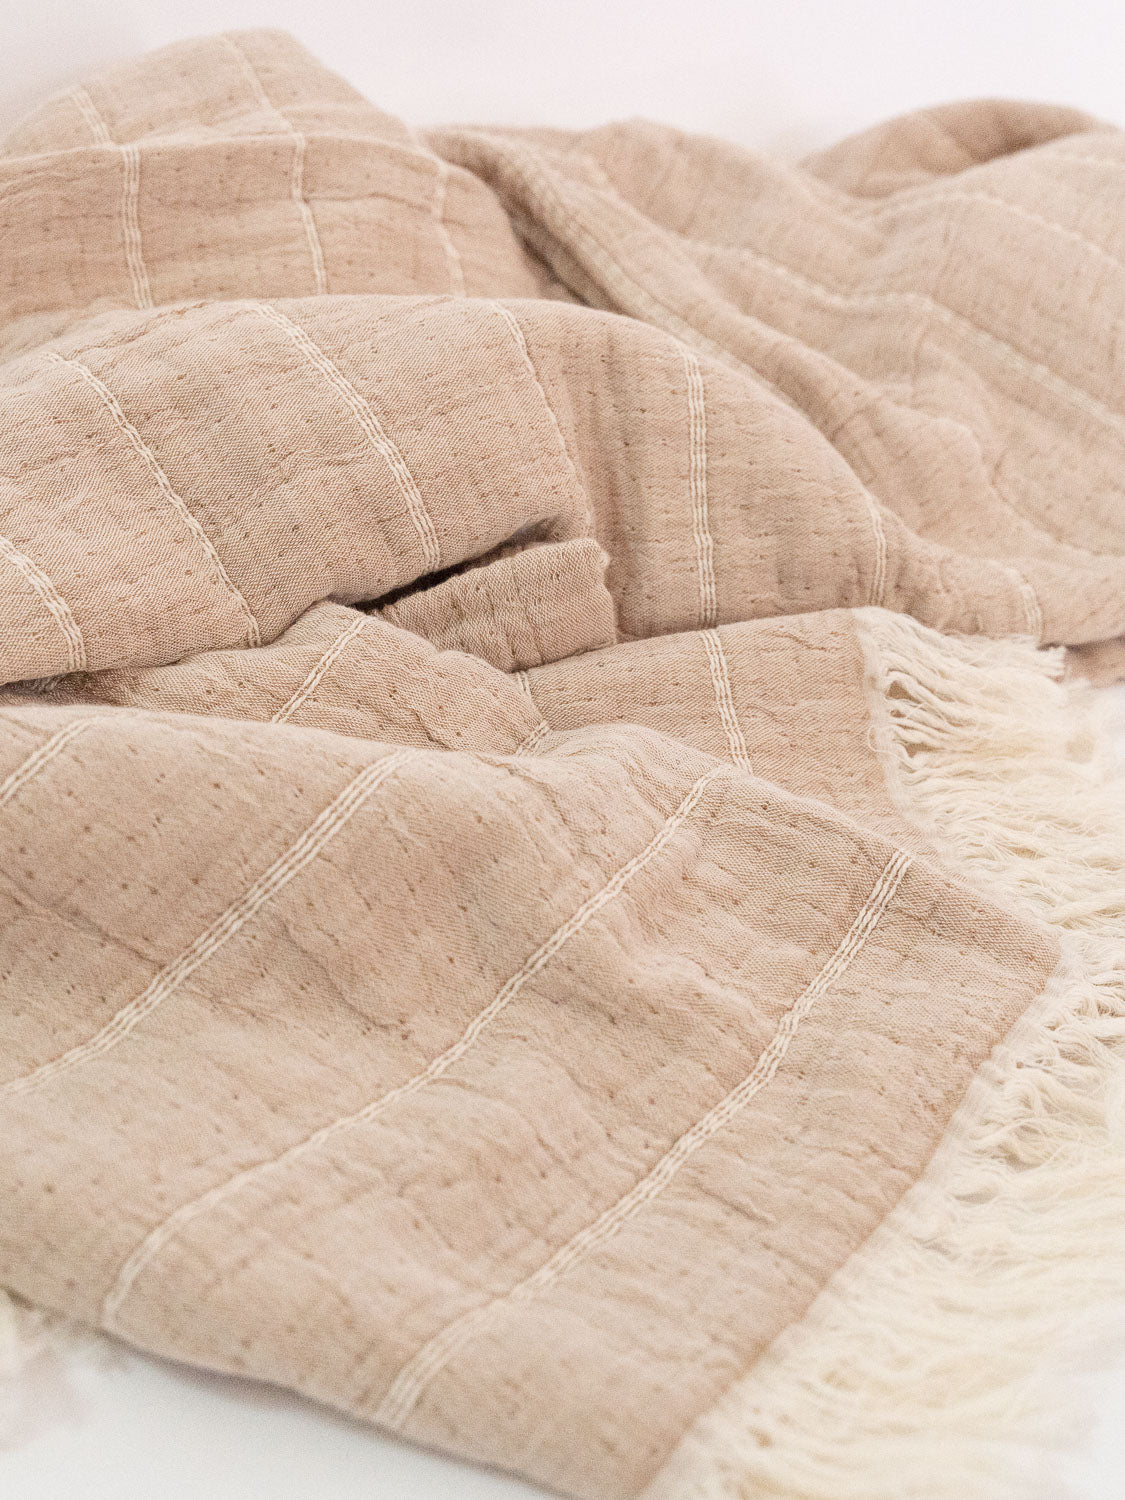 brown horizontal striped organic blanket close up